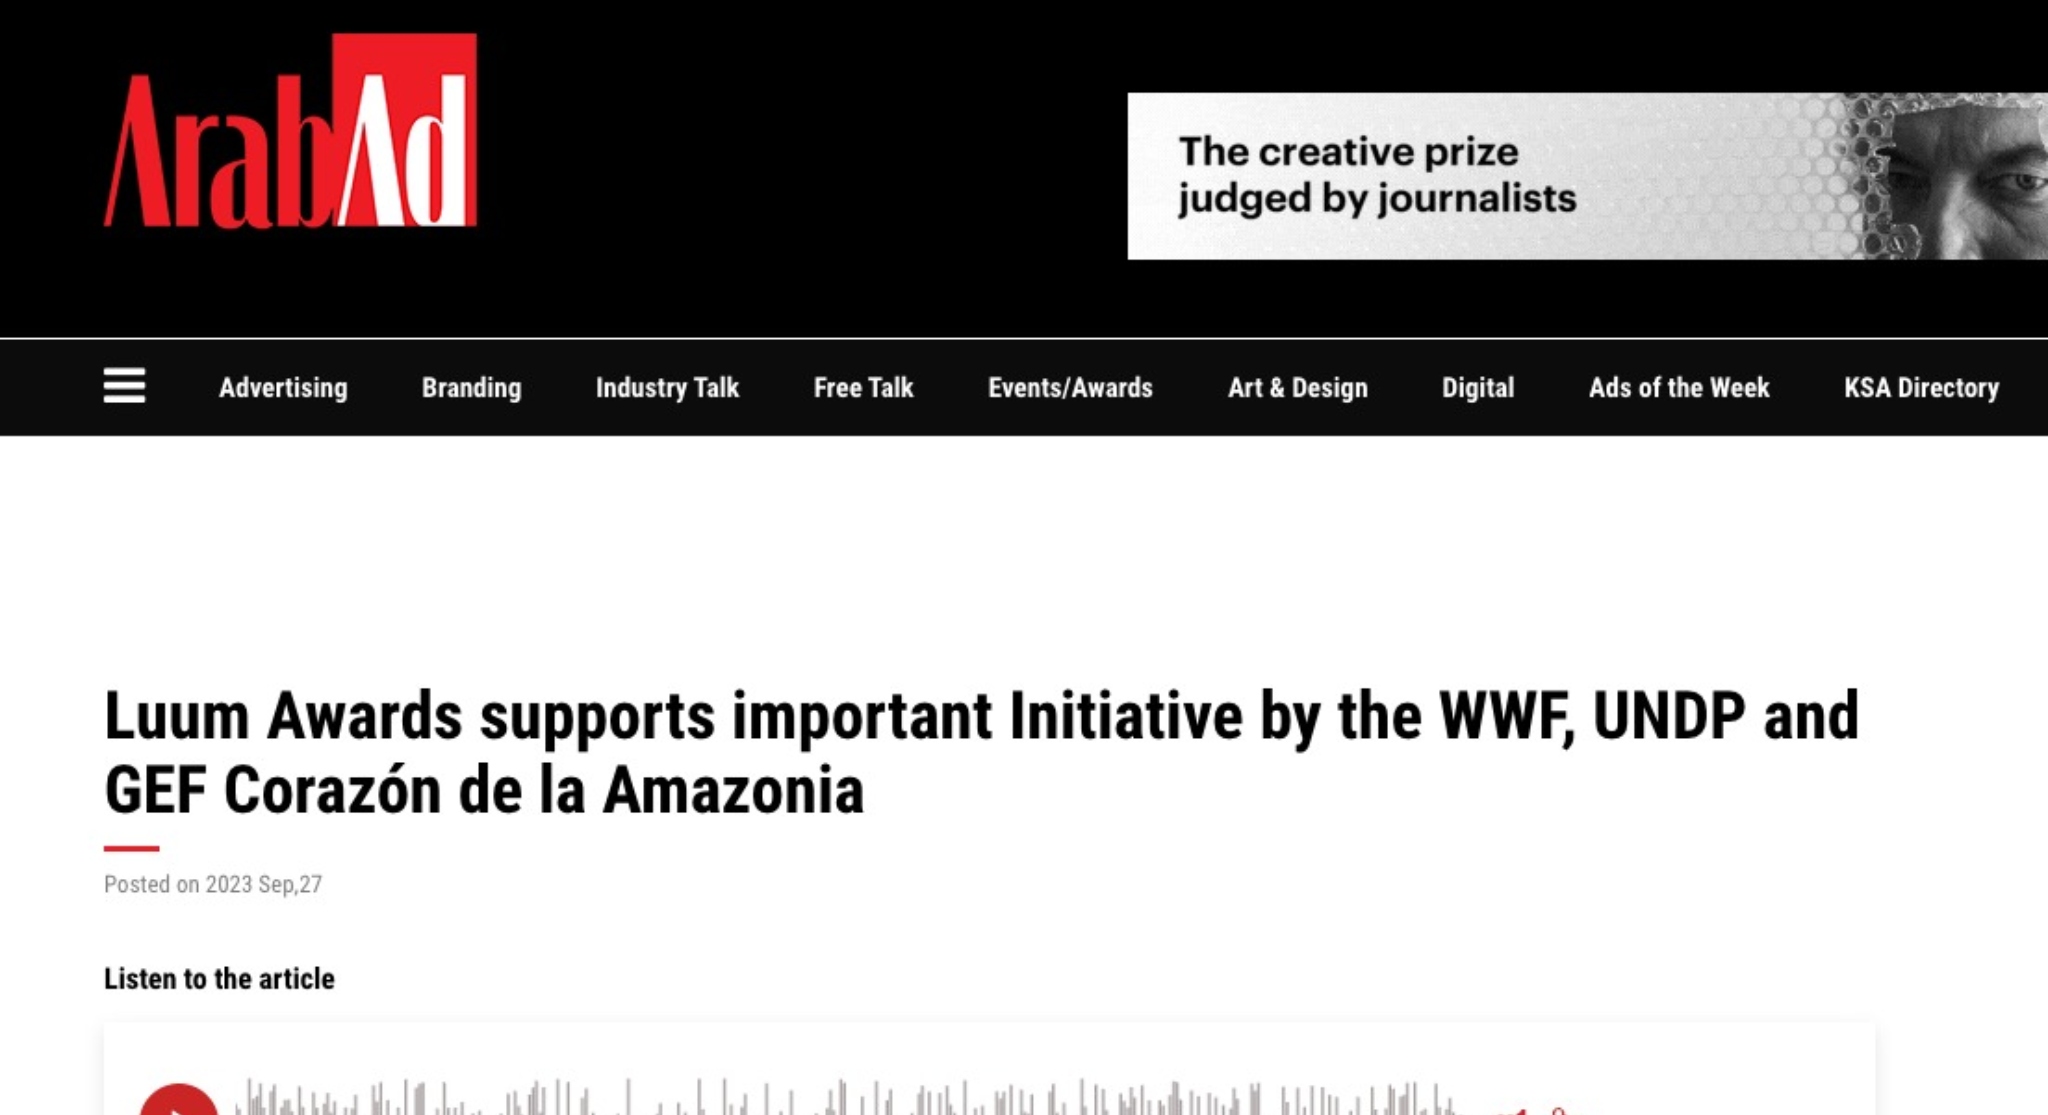 Luum Awards supports important Initiative by the WWF, UNDP and GEF Corazón de la Amazonia pic